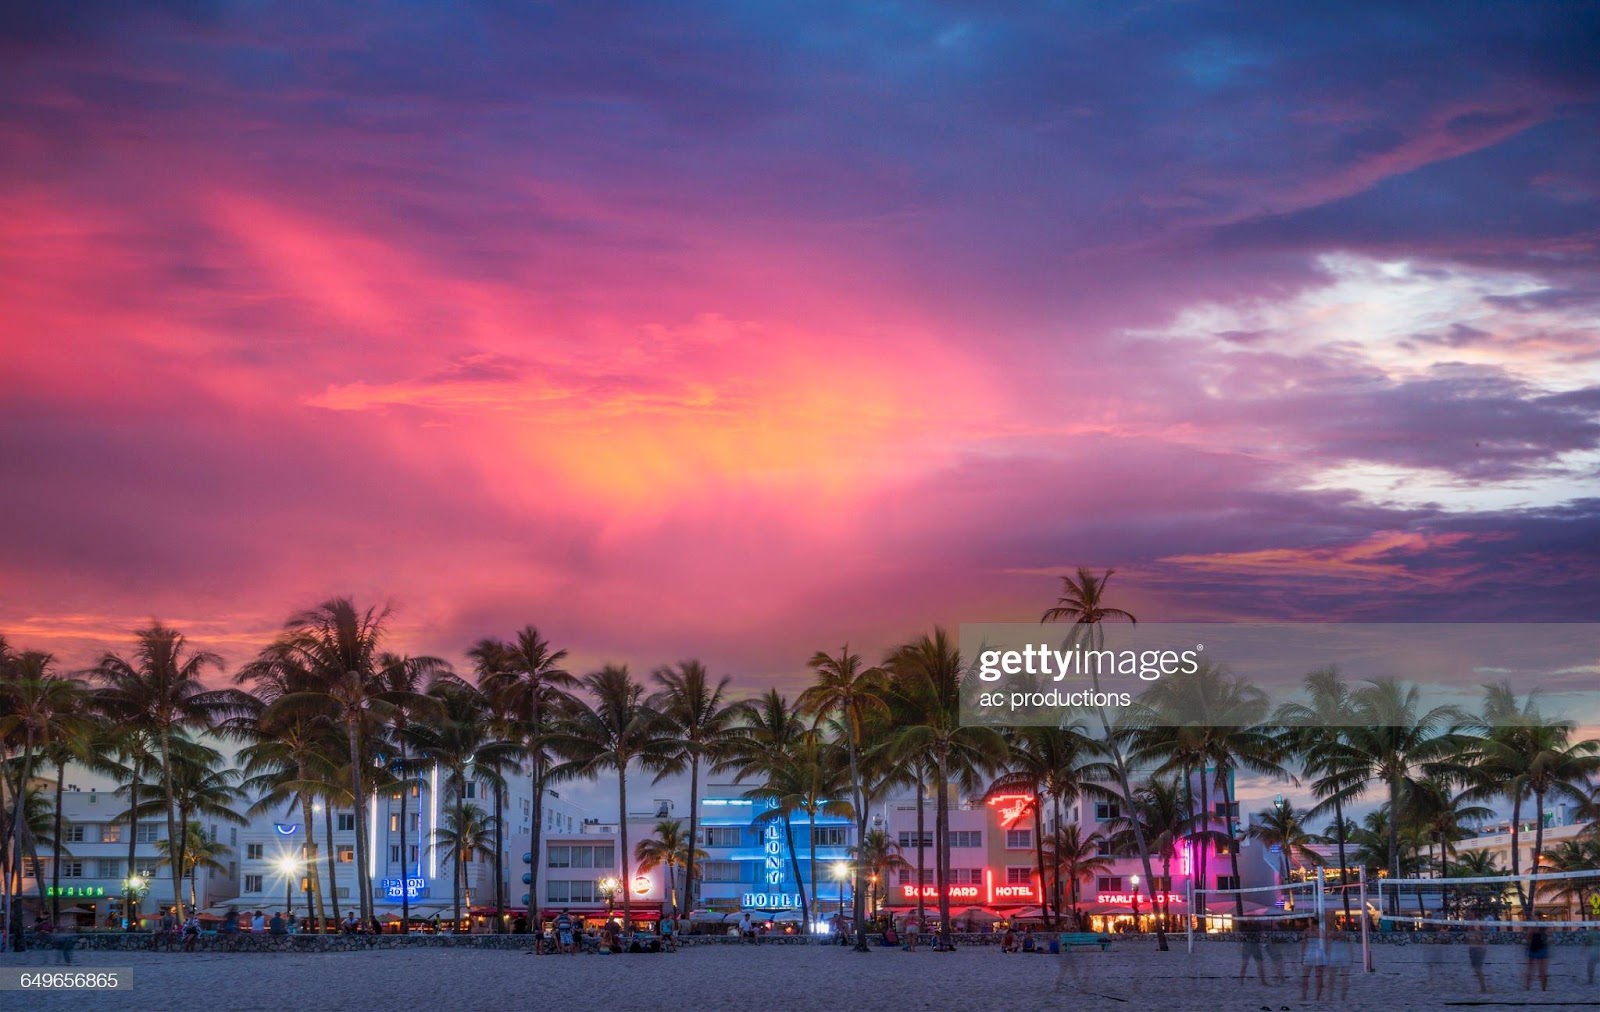 C:\Users\Valerio\Desktop\beachfront-buildings-under-sunset-sky-picture-id649656865.jpg